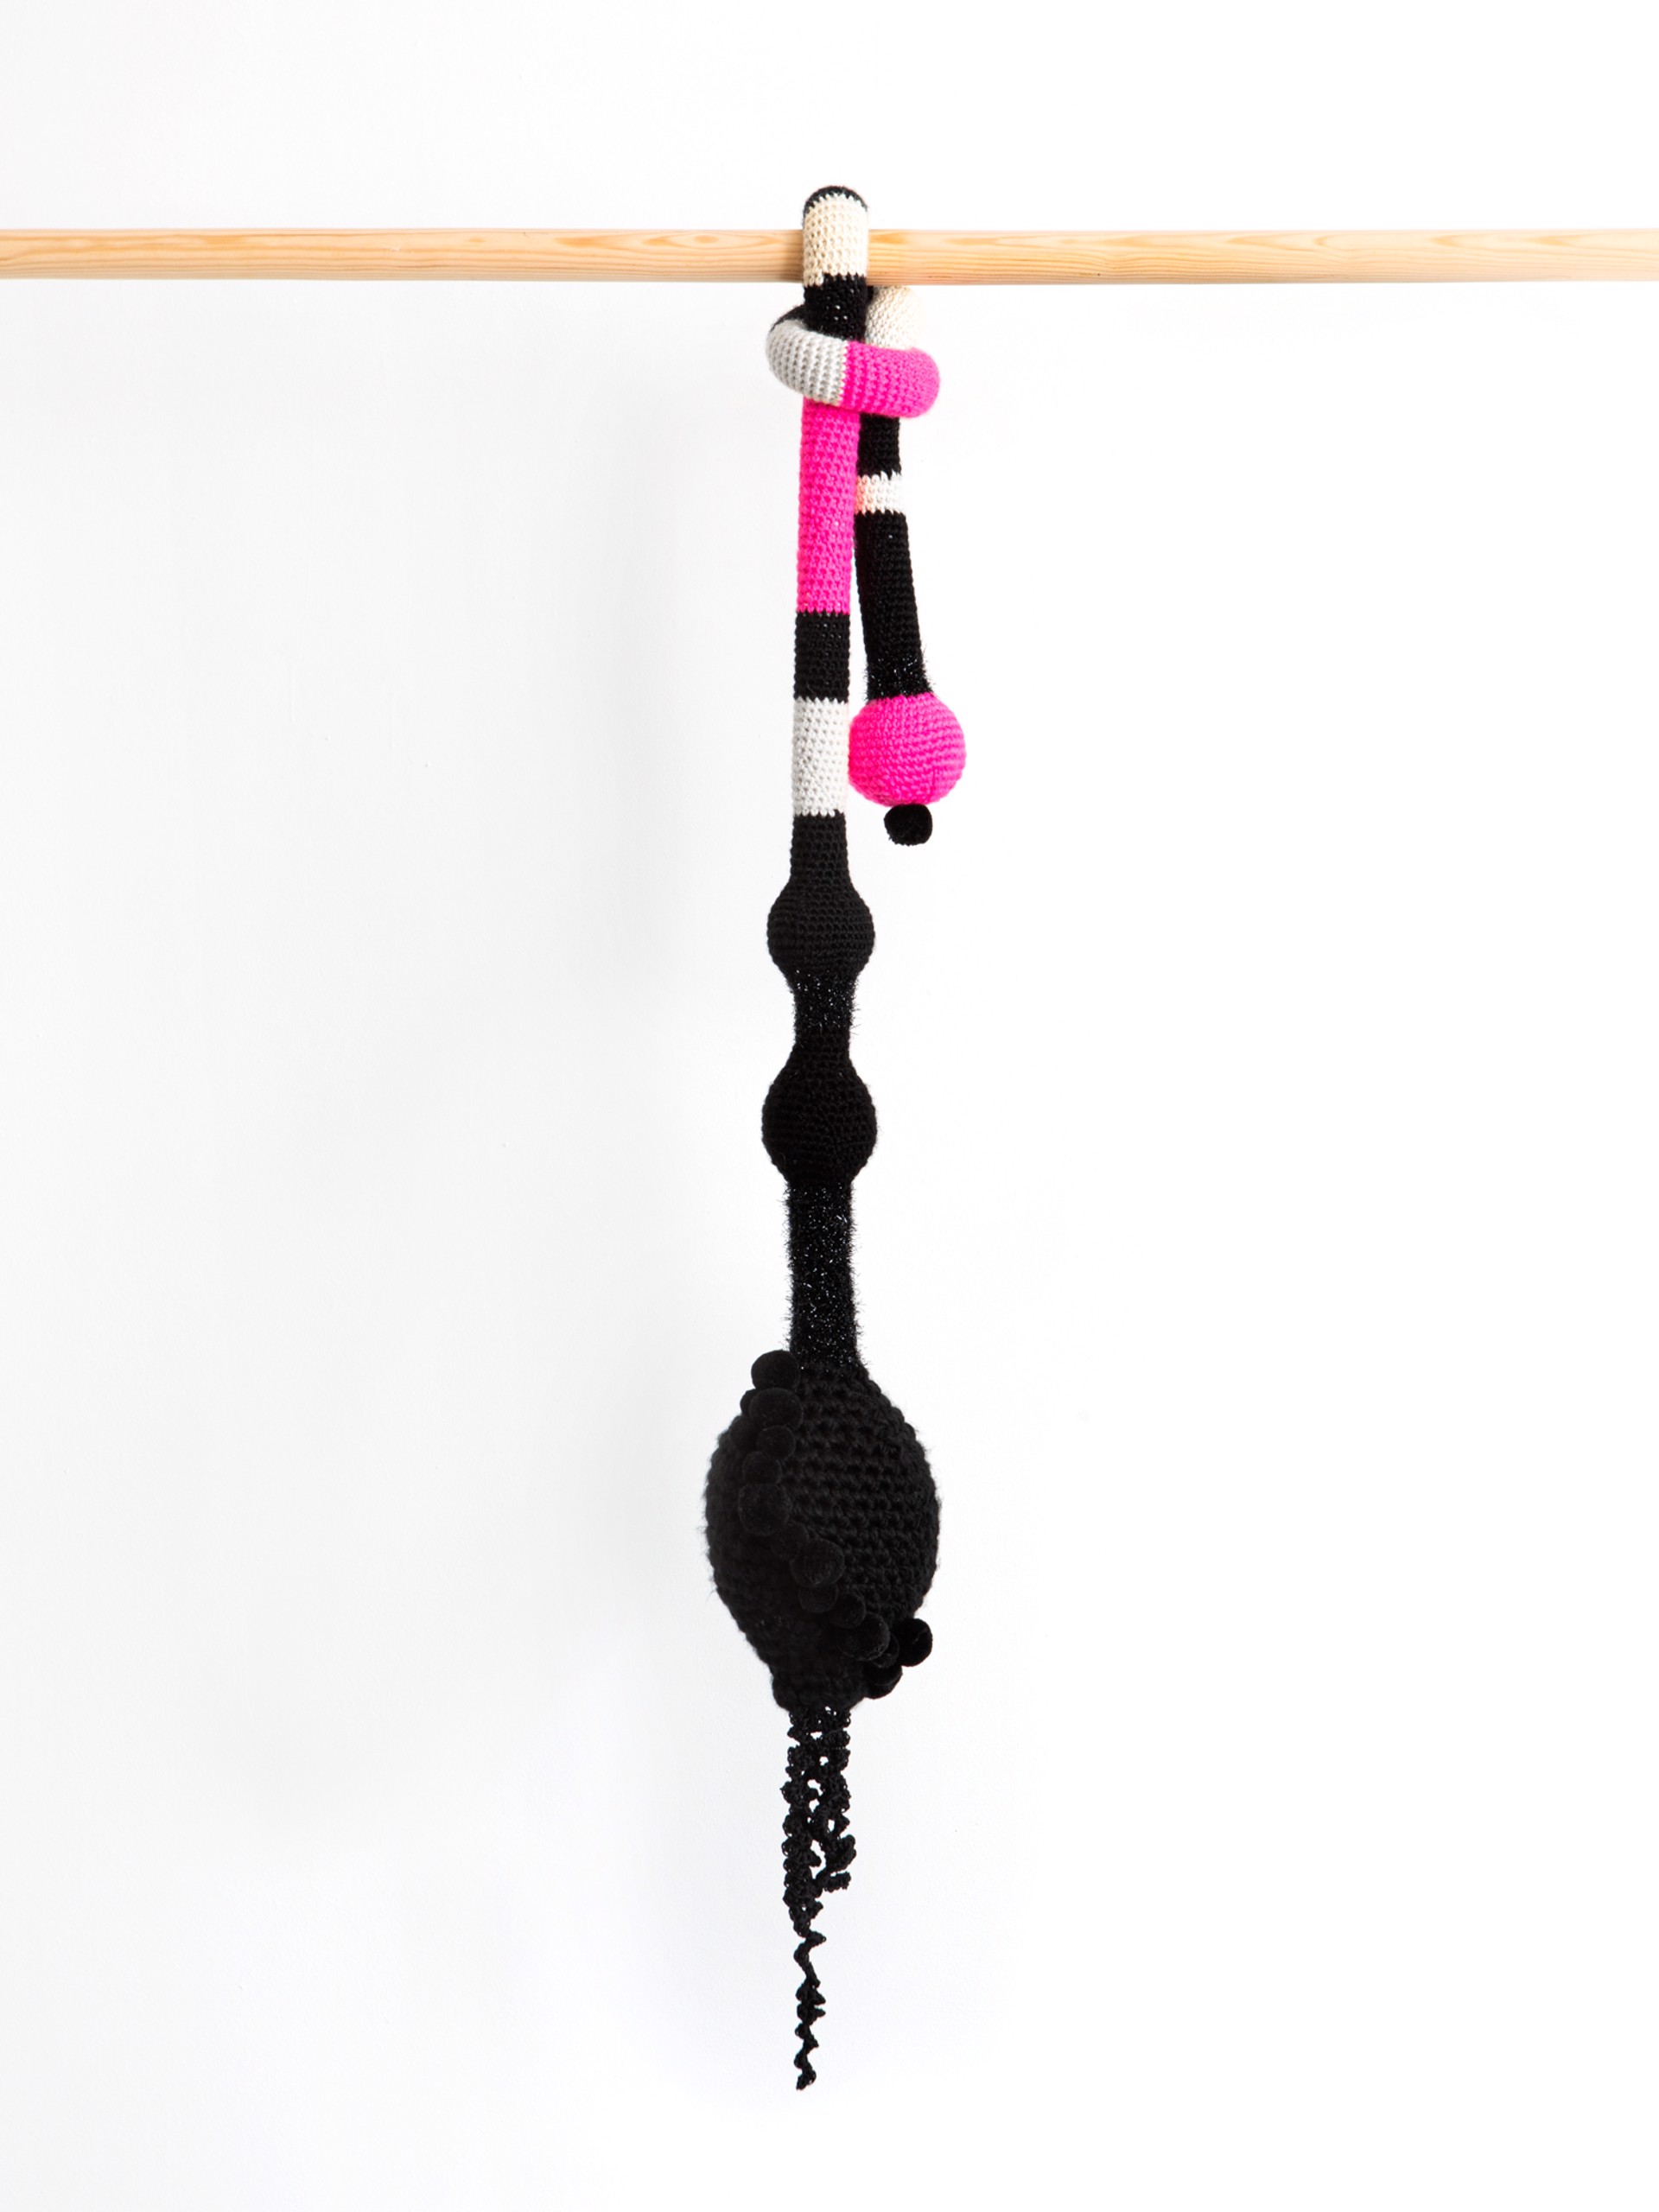 Hanging Piece "Neon Pink" by Monica Ceballos Brenninkmeijer